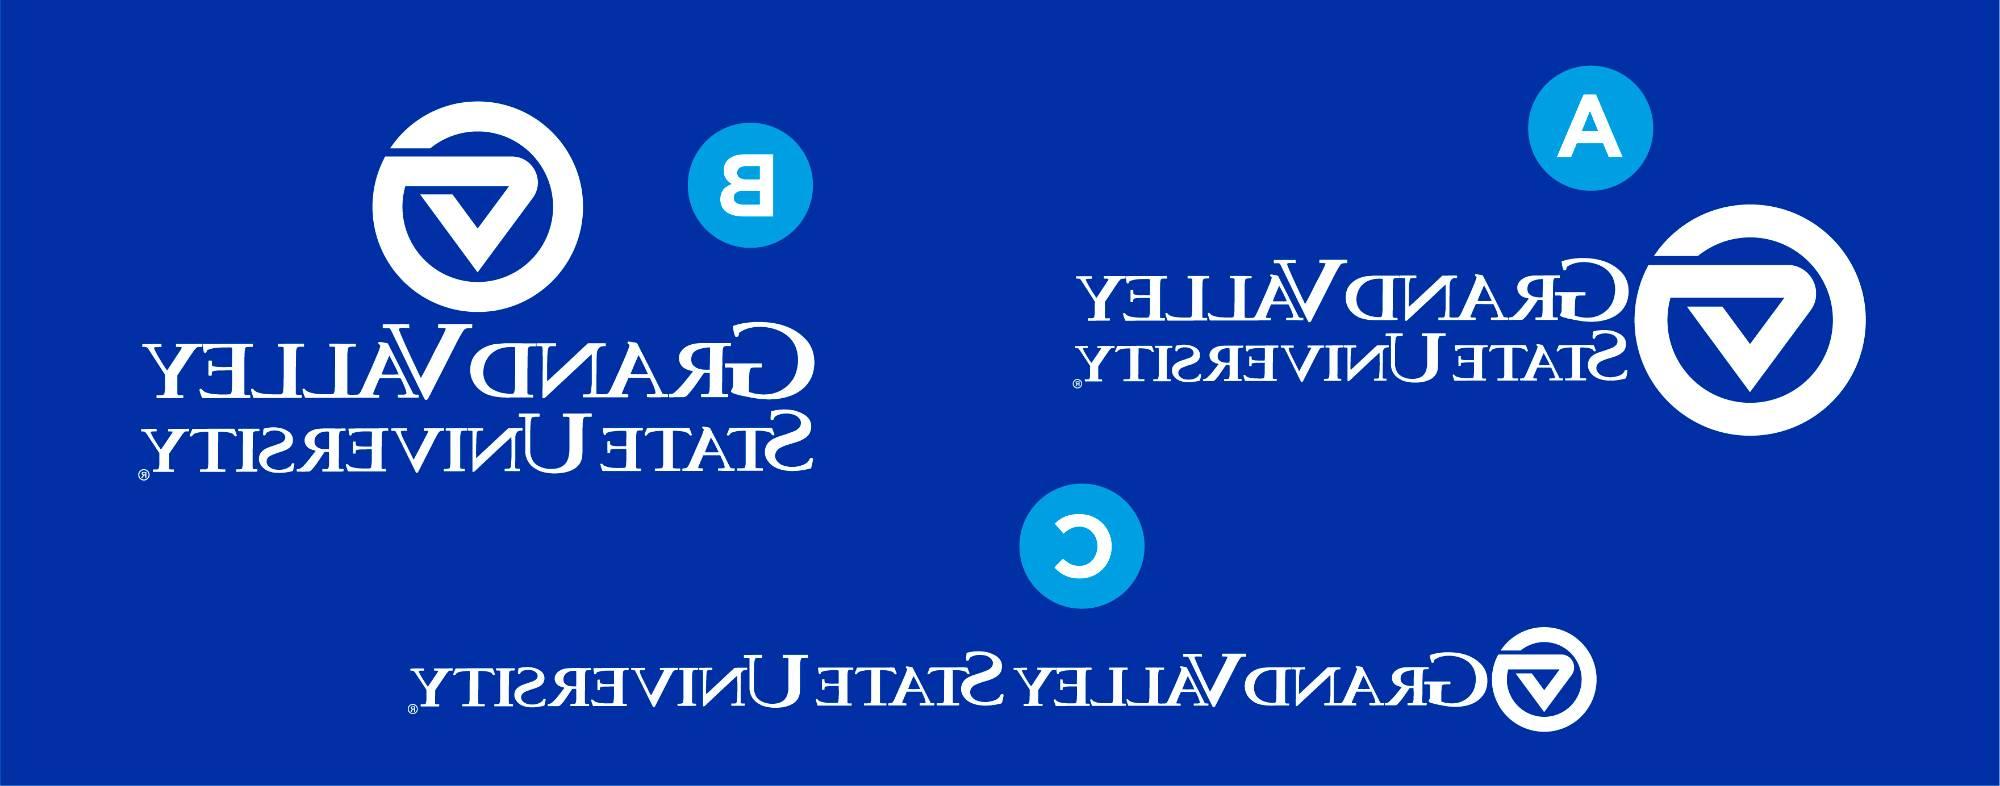 Three 博天堂官方 logos: one markleft, one marktop, one 单行的. 字母“A”在左标旁边, "B"在商标旁边, “C”在单线标志旁边.